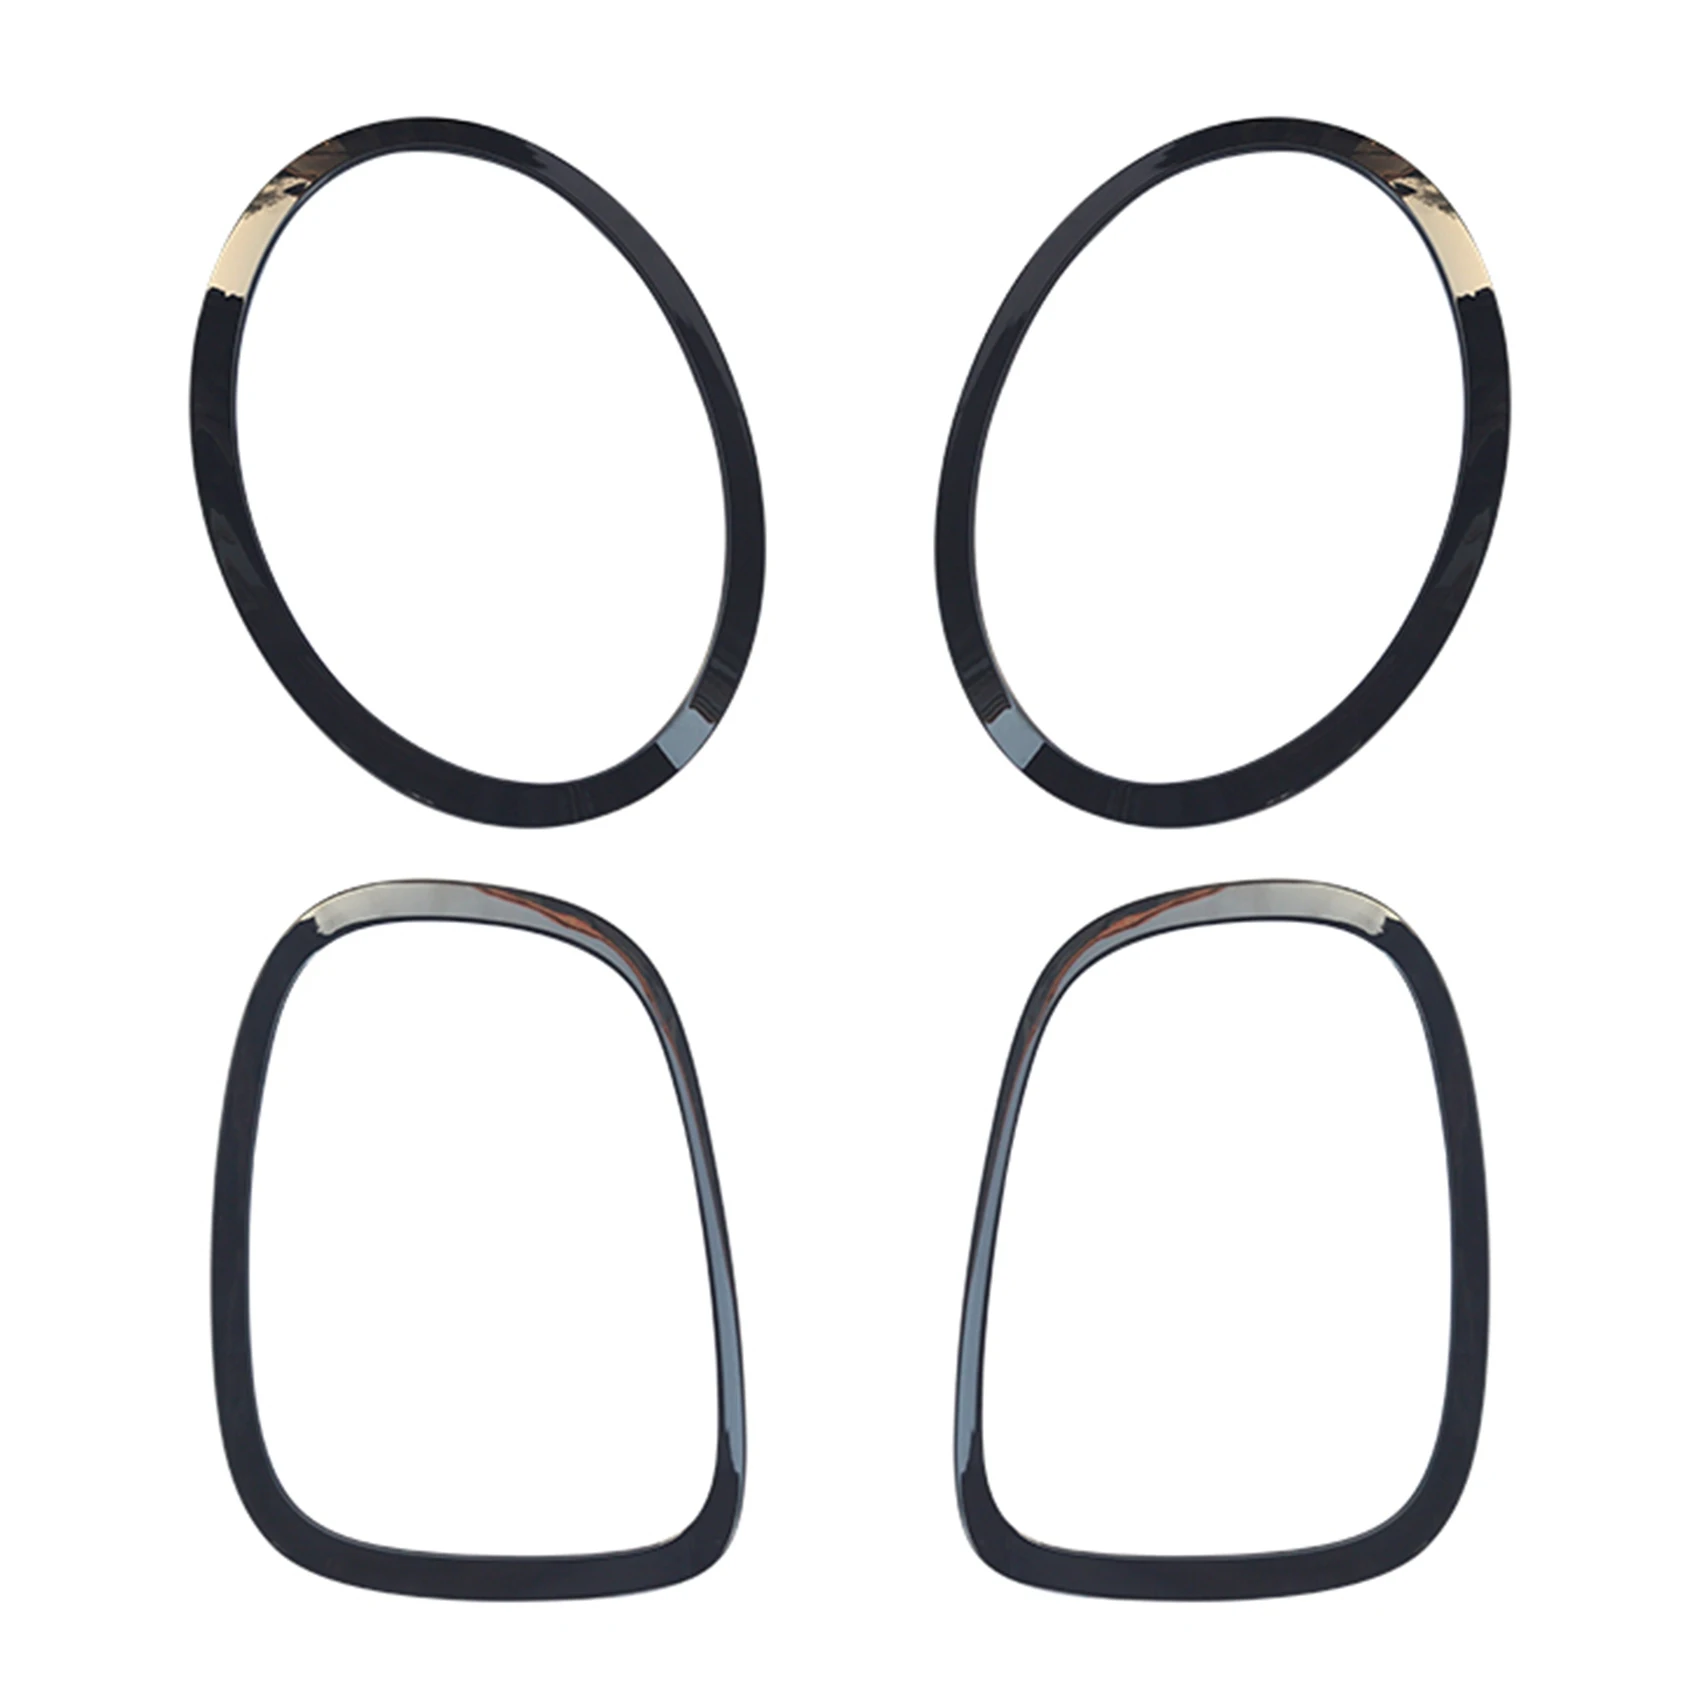 

New Headlight Trim Ring Headlight Surround Ring for Mini Cooper F55 F56 F57 R56 R57 R58 R59 51137149906 51137149905